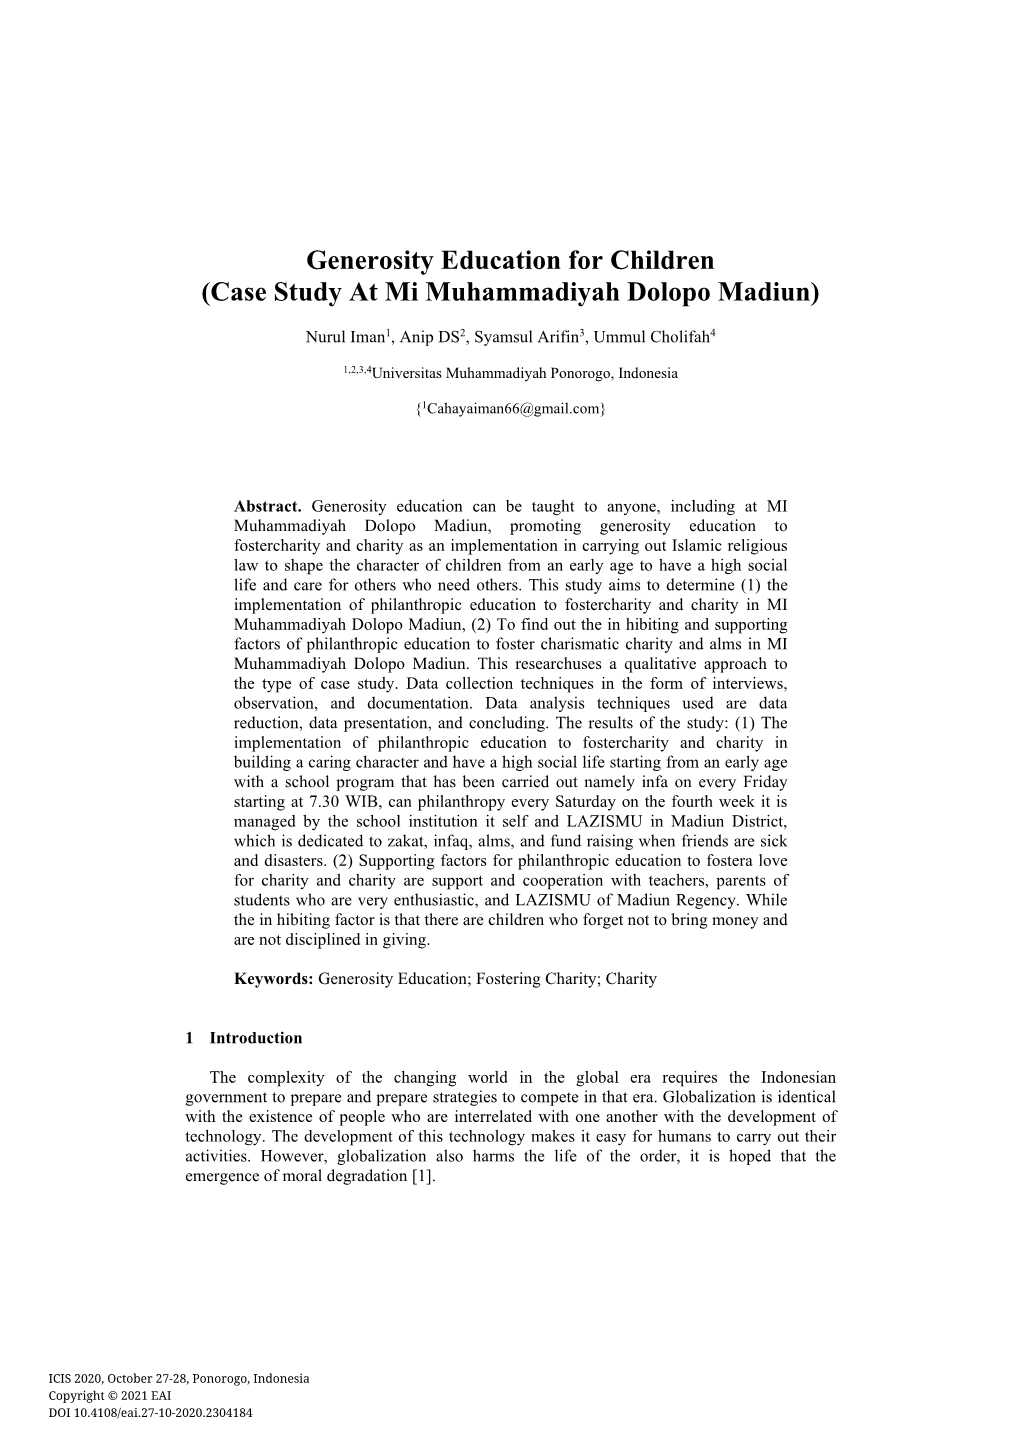 Generosity Education for Children (Case Study at Mi Muhammadiyah Dolopo Madiun)